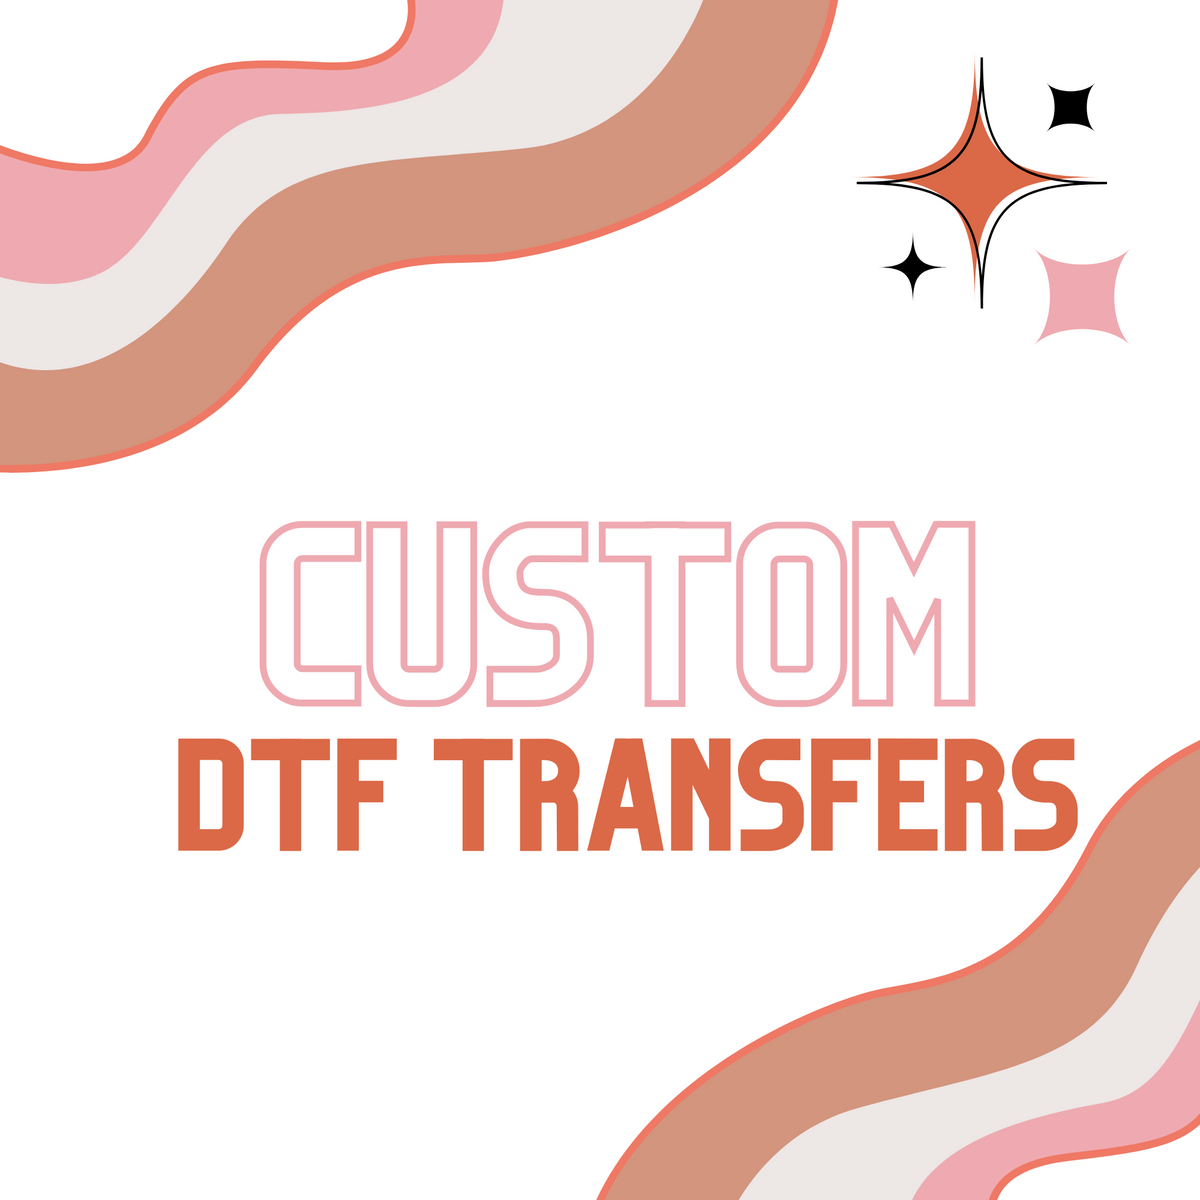 Your Custom Dtf Transfers (2 Business Day Turnaround)